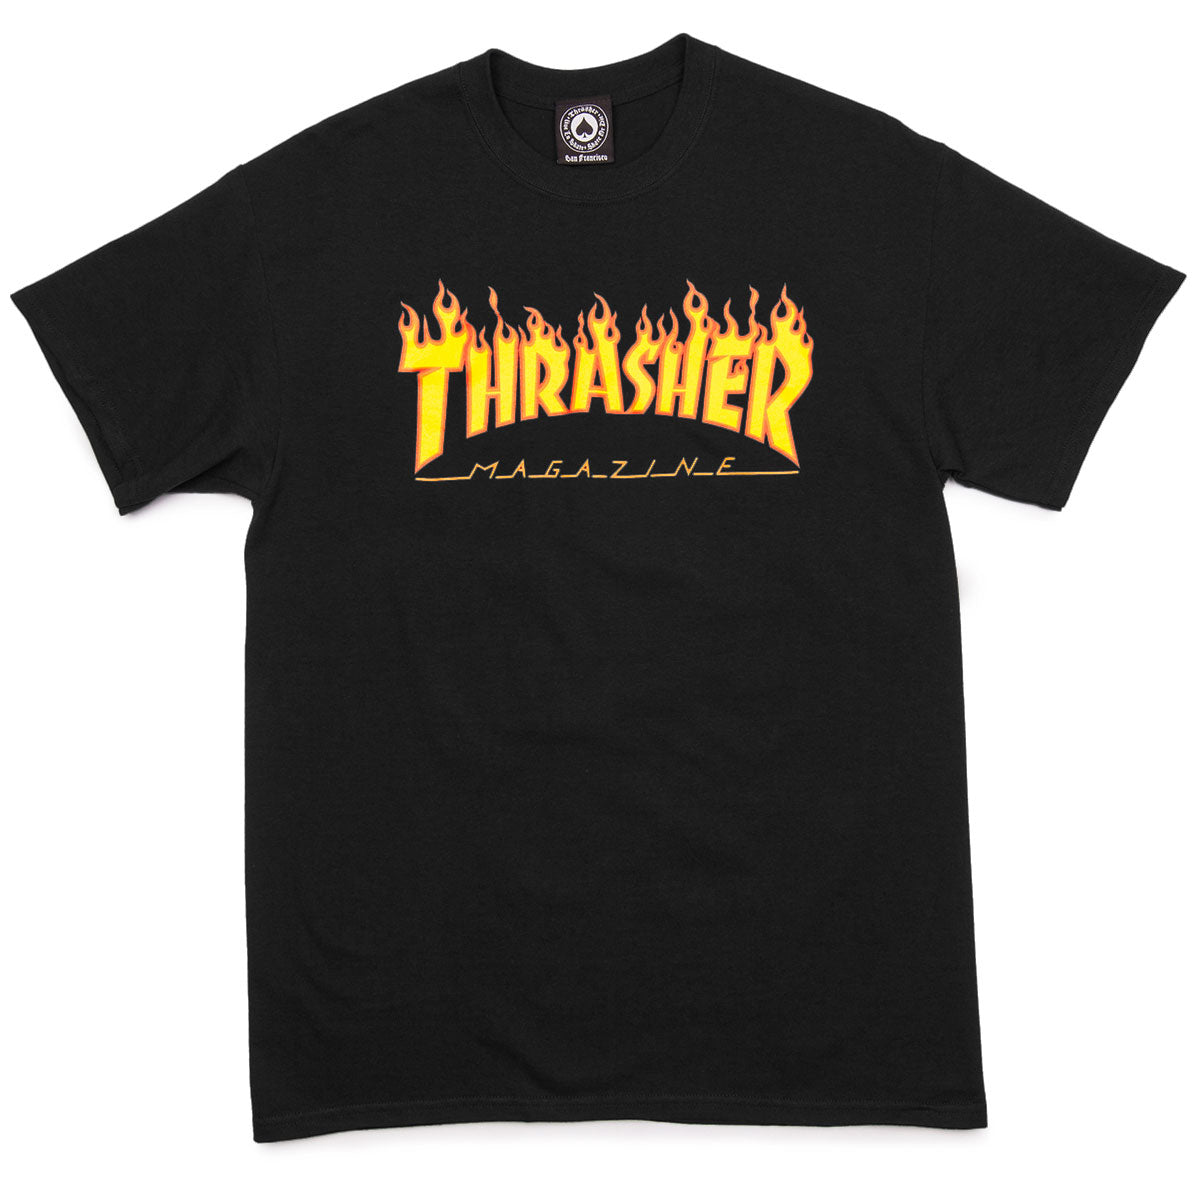 Thrasher Flame T-Shirt - Black image 1